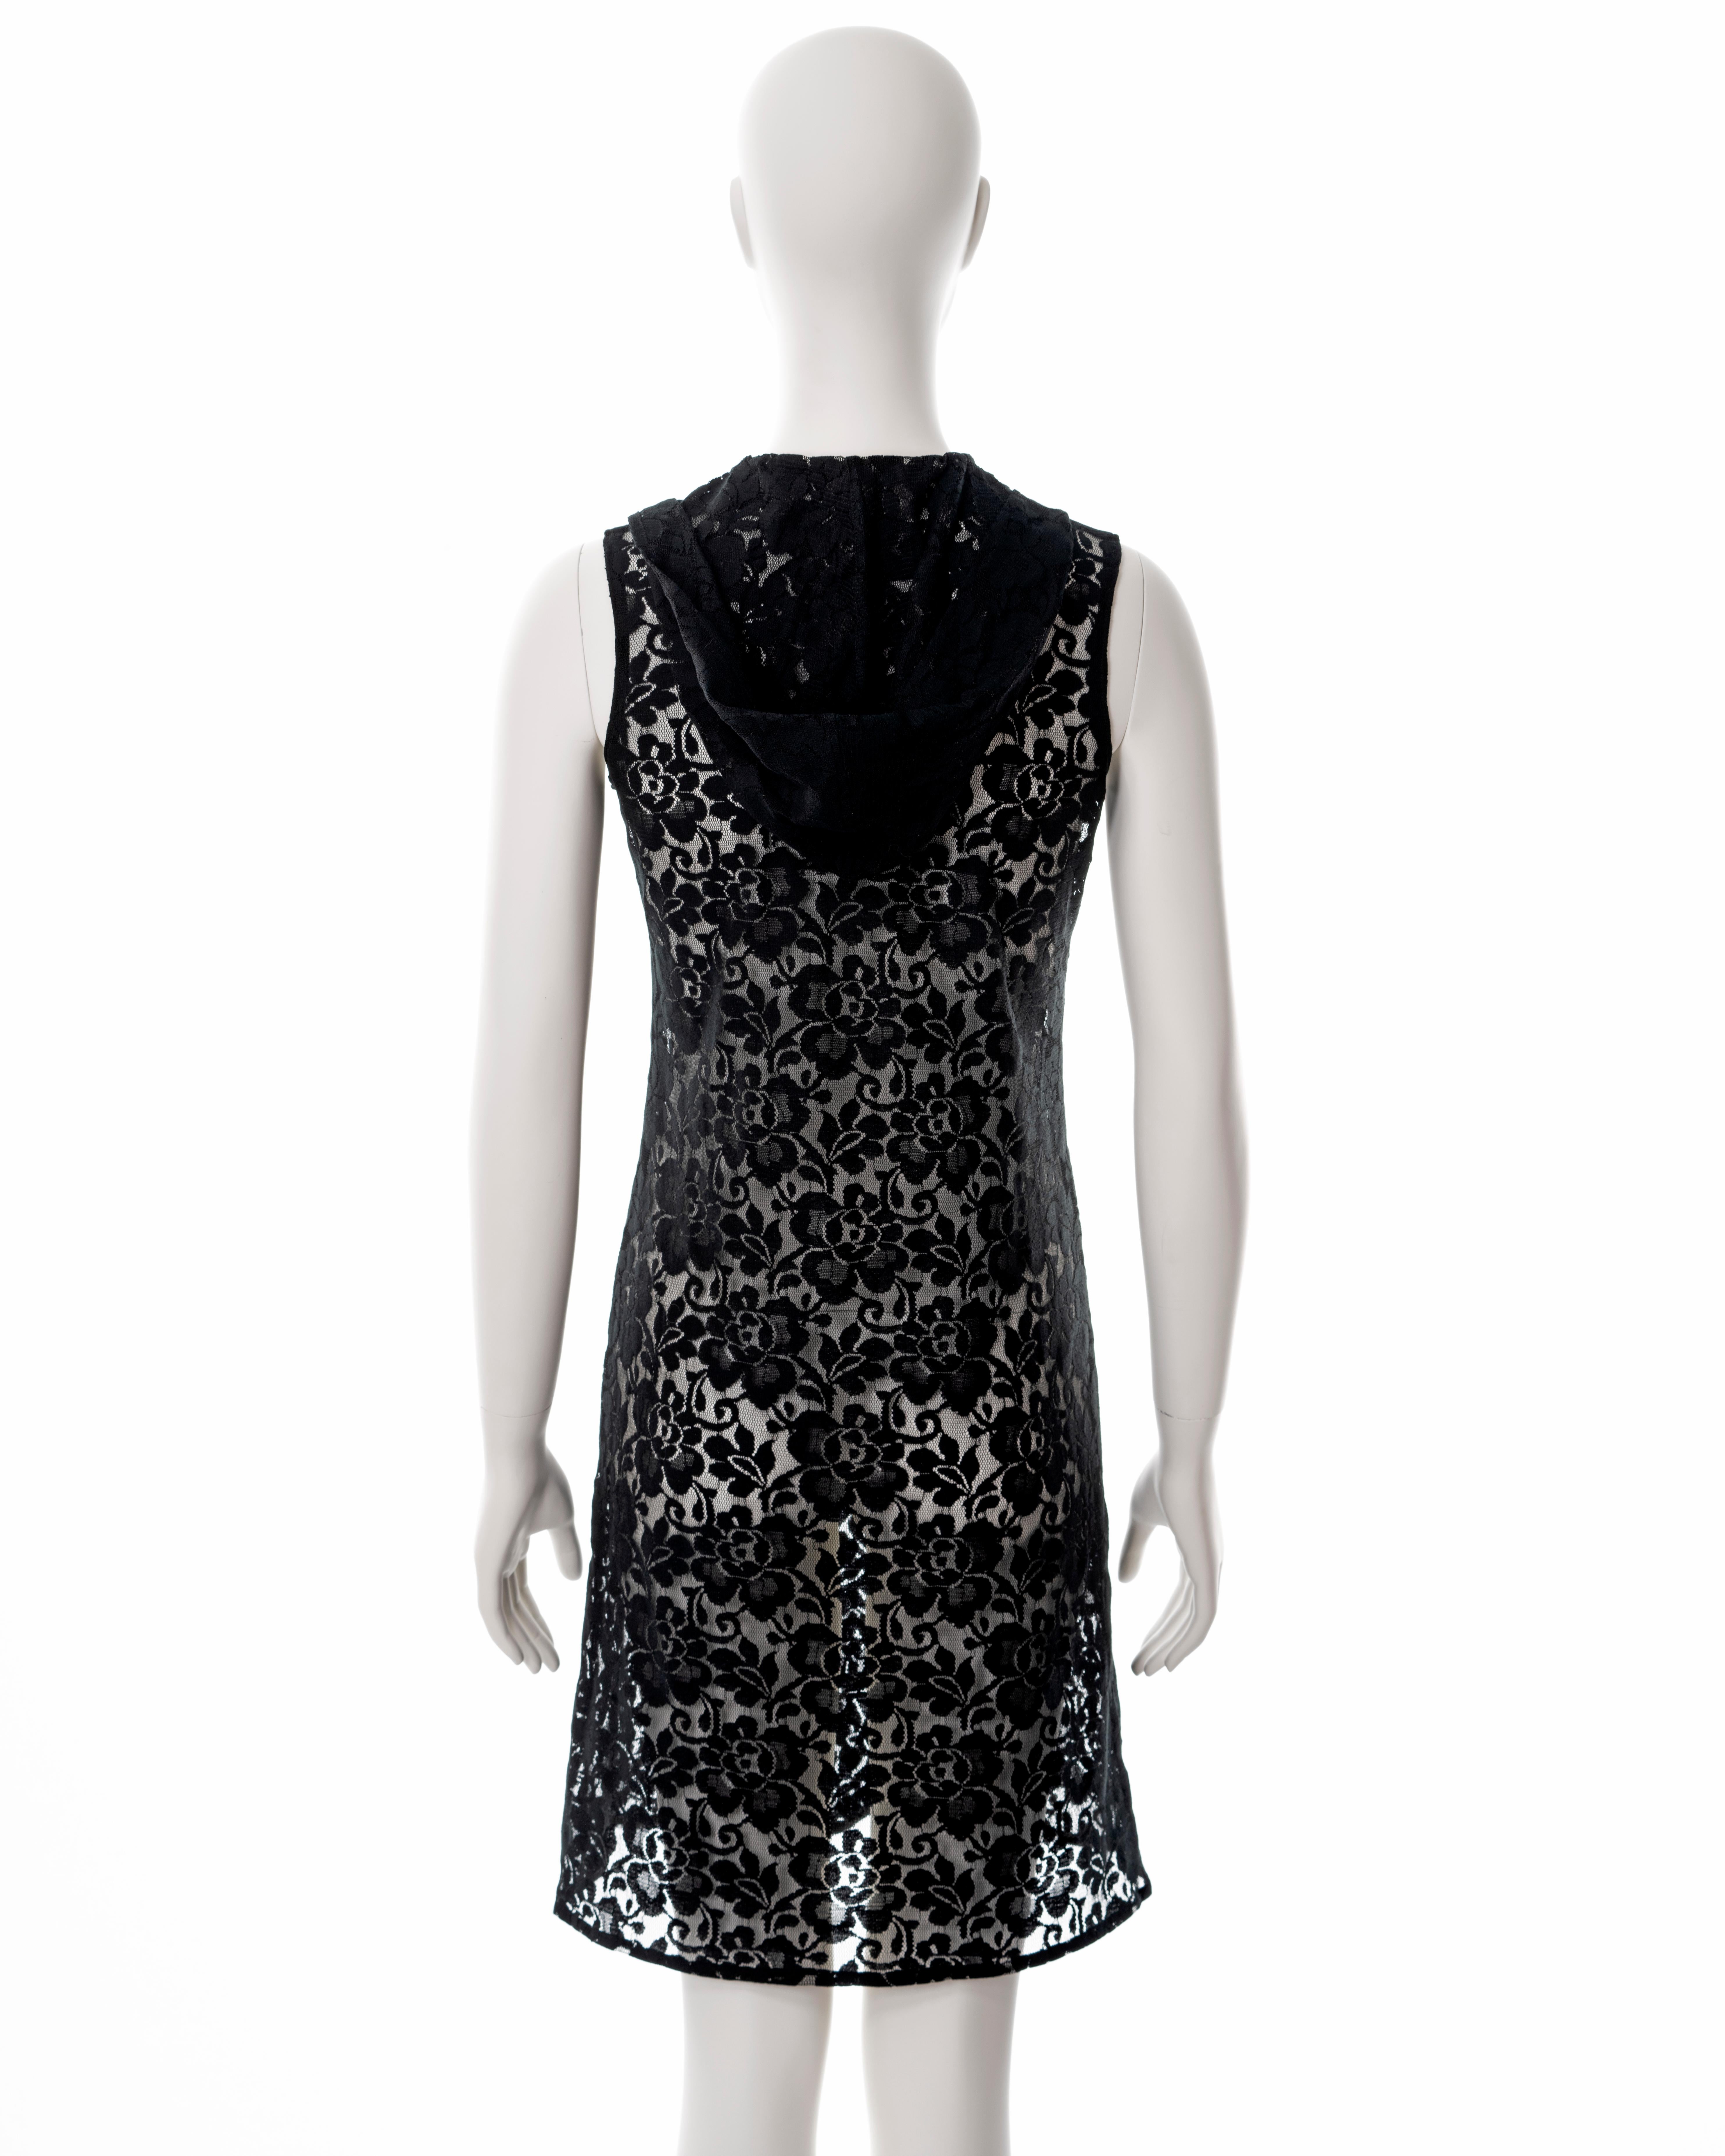 Helmut Lang black lace hooded shift dress, ss 1996 For Sale 8